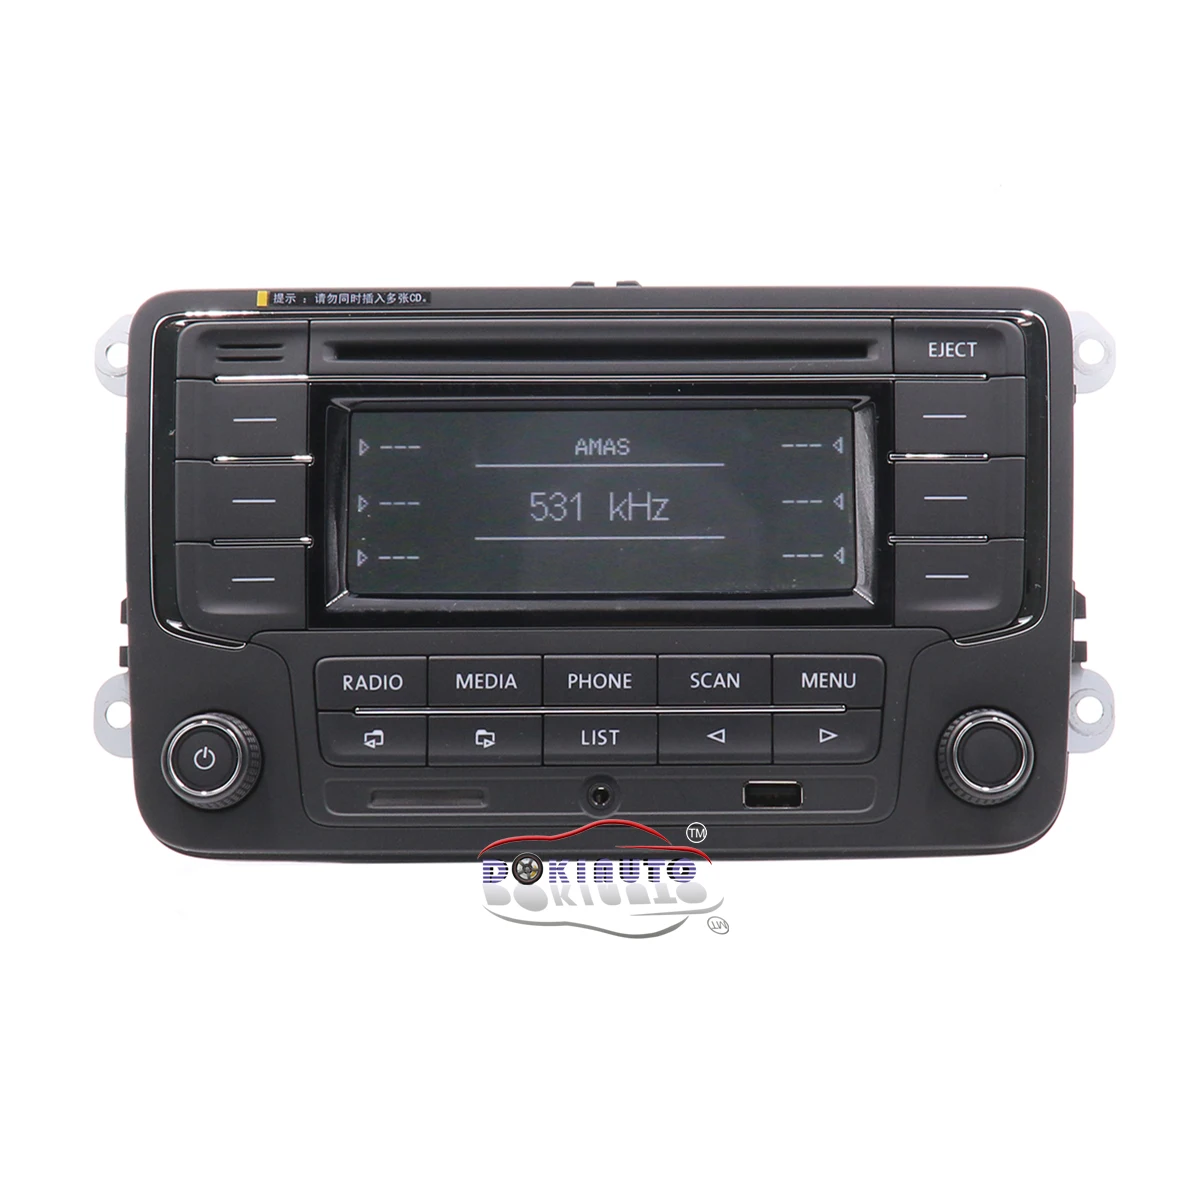 FOR Golf 5 6 Jetta Mk5 MK6 Passat B6 CC B7 RCN210 Plus Bluetooth-compatible MP3 USB Player CD MP3 Radio 3AD035185A pioneer car stereo